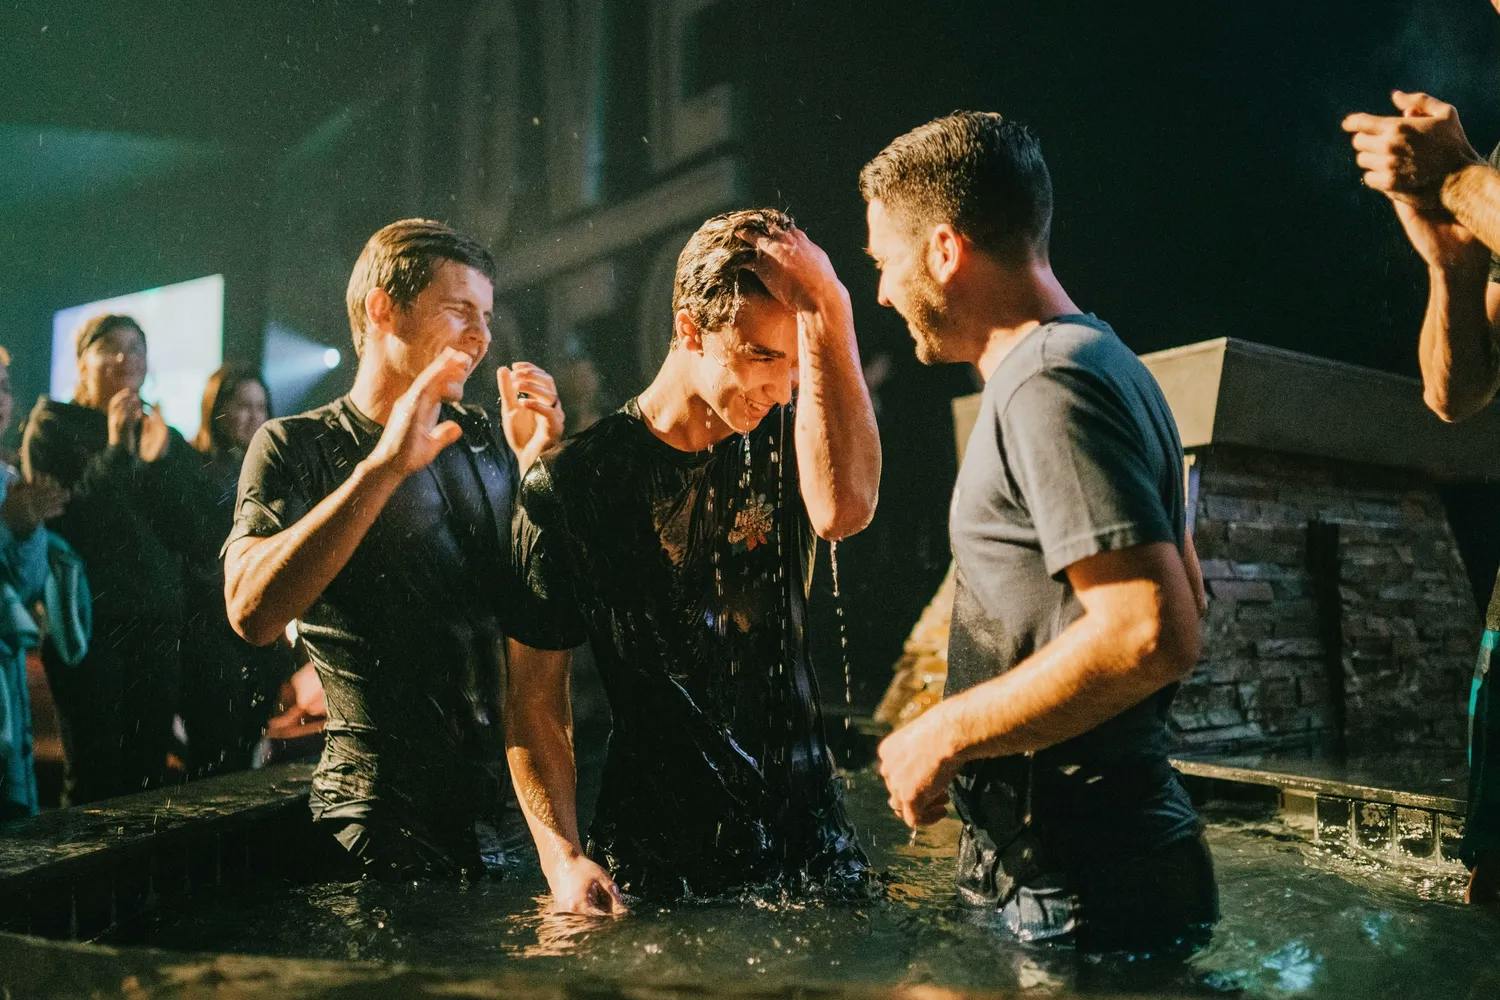 Image of folks getting baptized